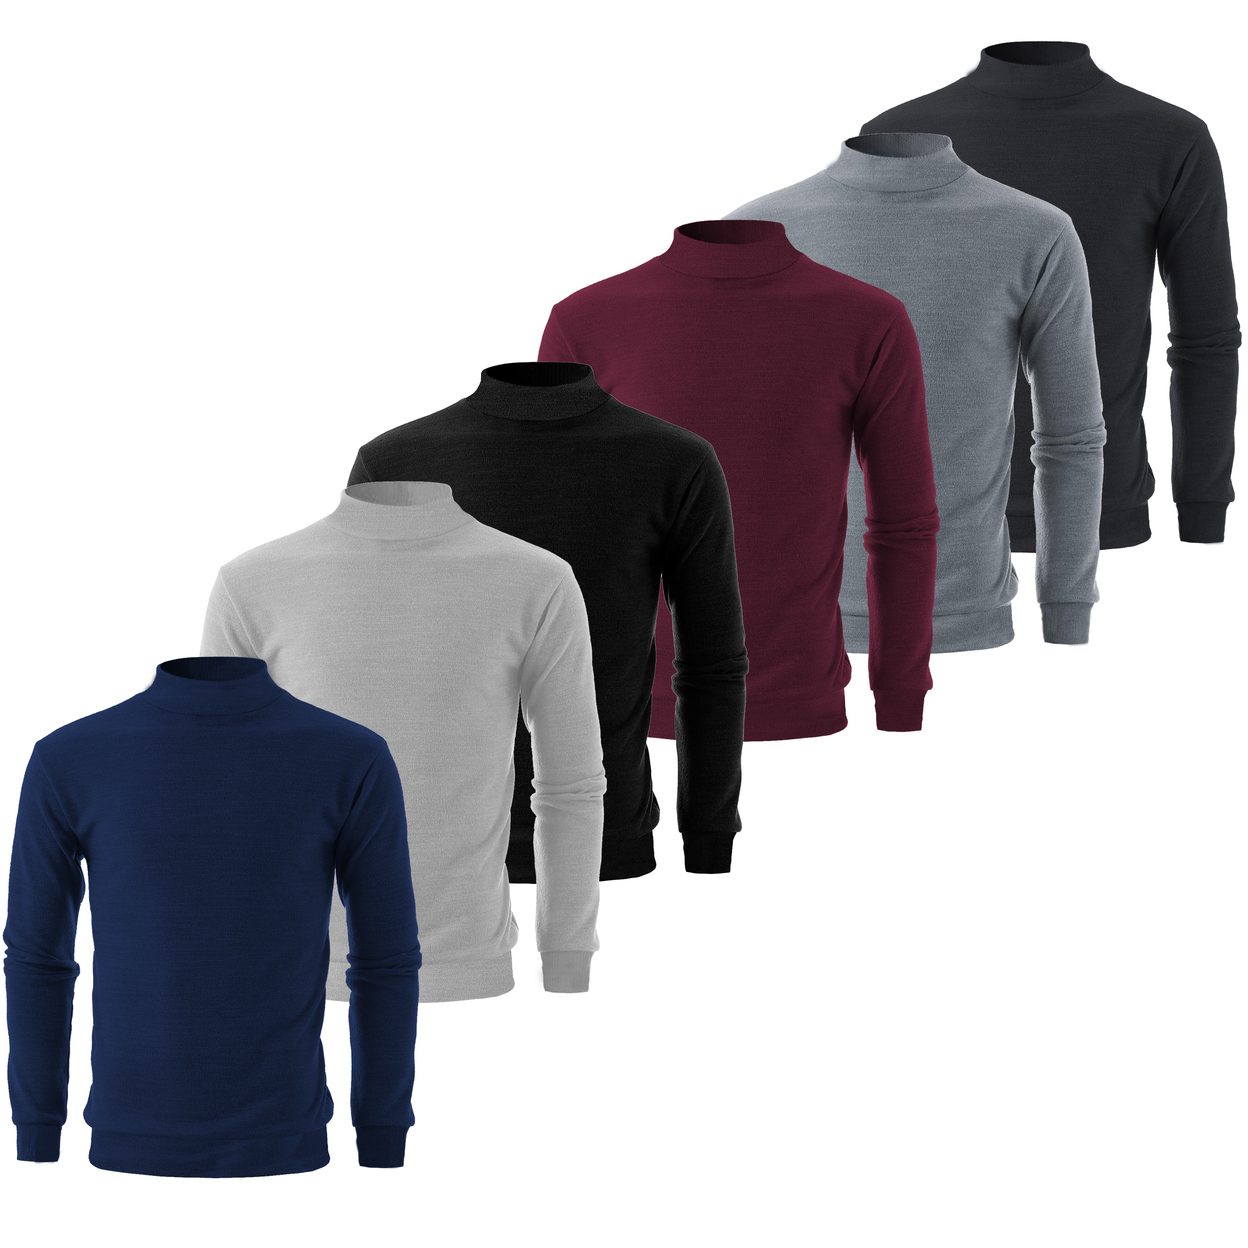 Men's Winter Warm Cozy Knit Slim-Fit Mock Neck Sweater - Navy, Xx-large